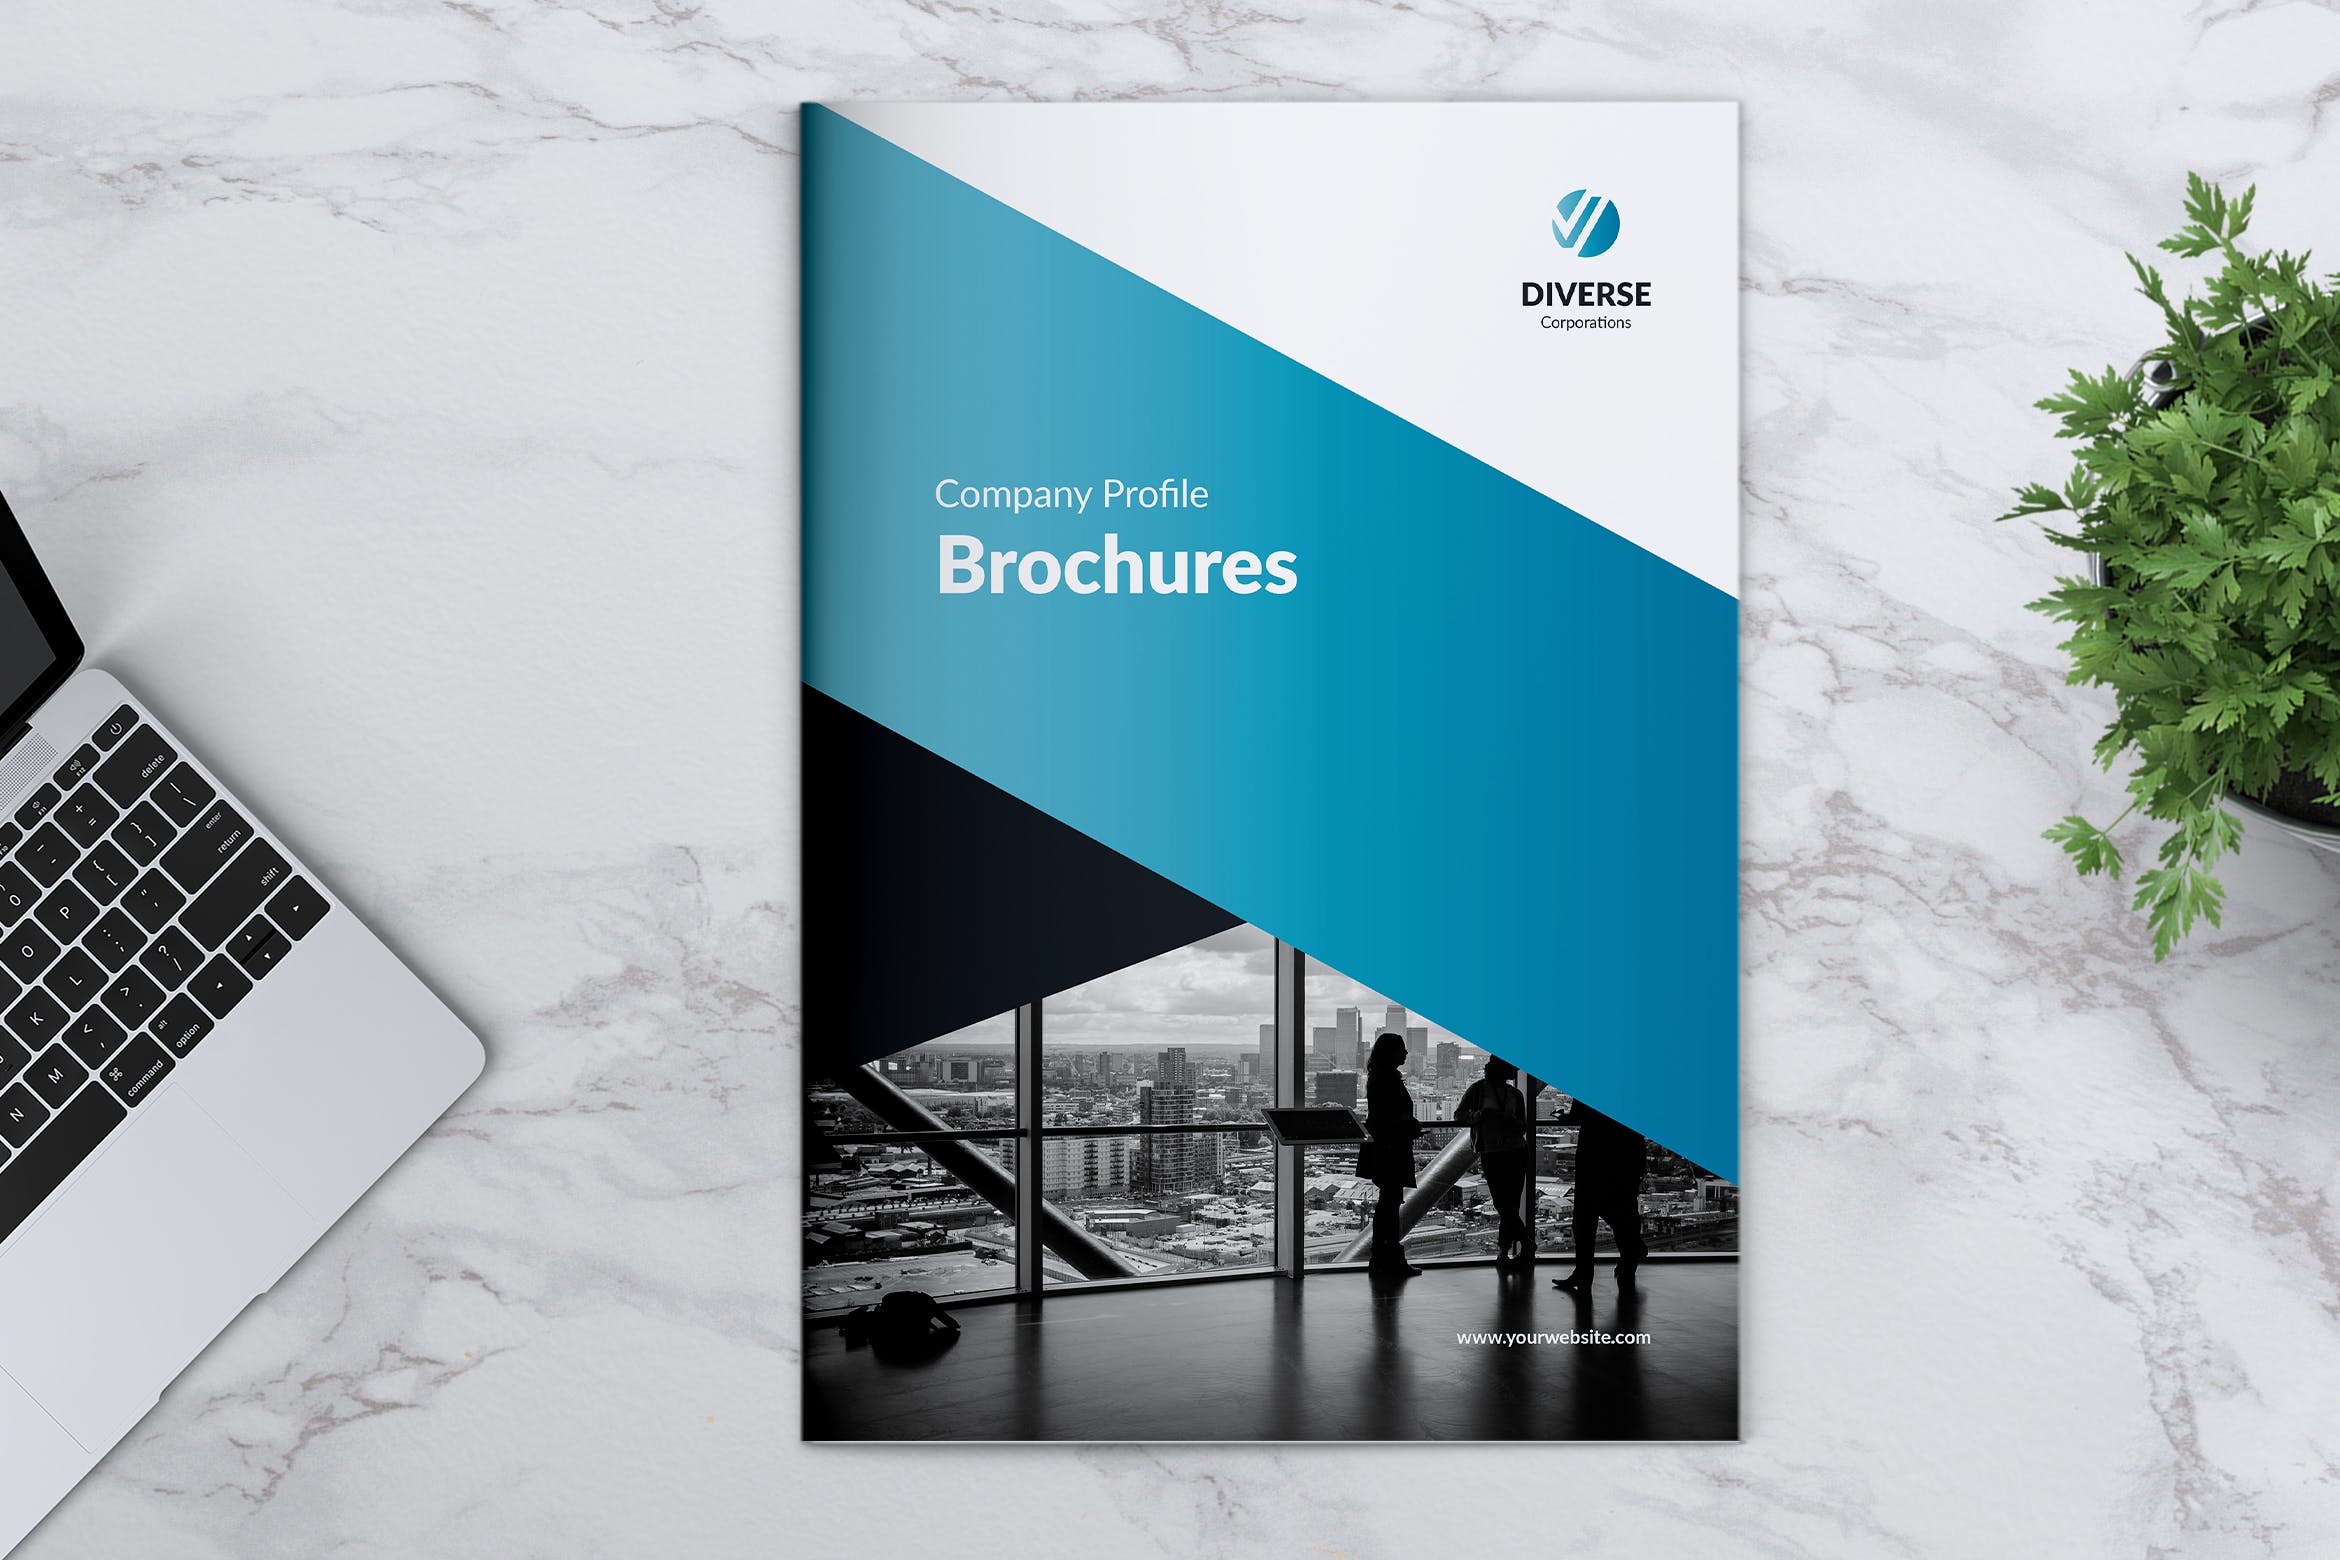 多元化大型公司简介企业画册设计模板 DIVERSE Professional Company Profile Brochures插图